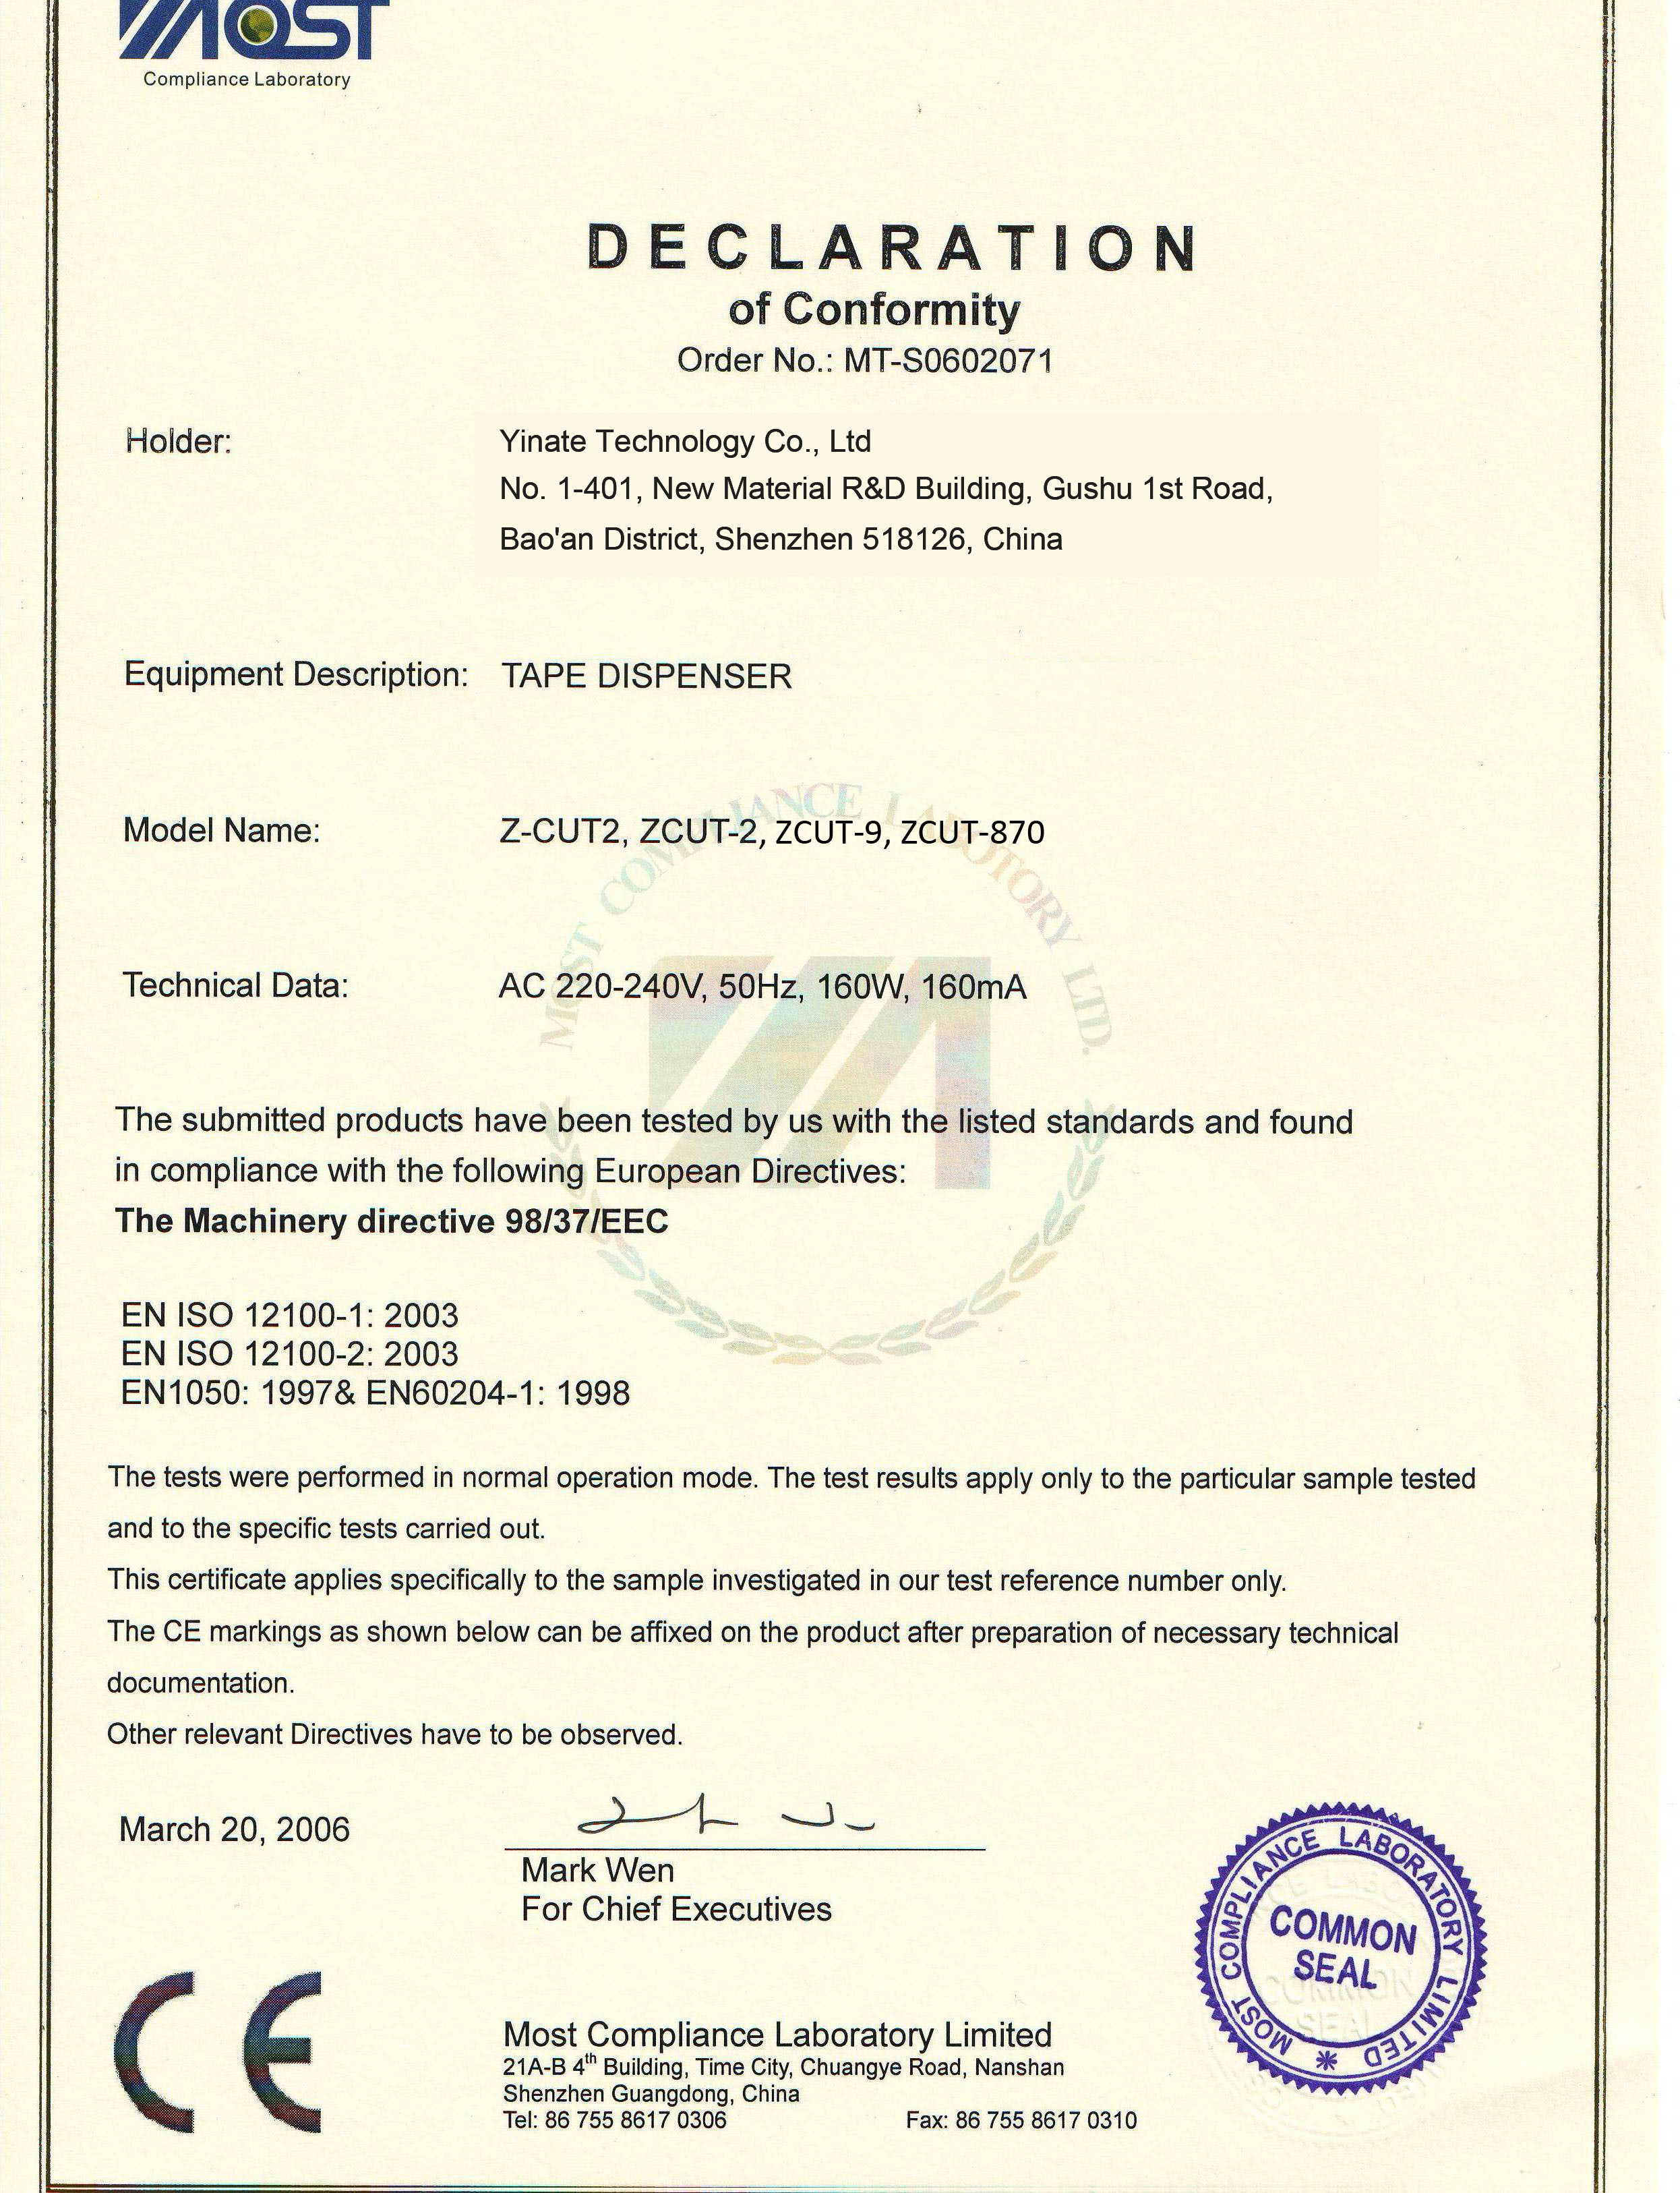 Yinate Technology Co., Ltd Certifications